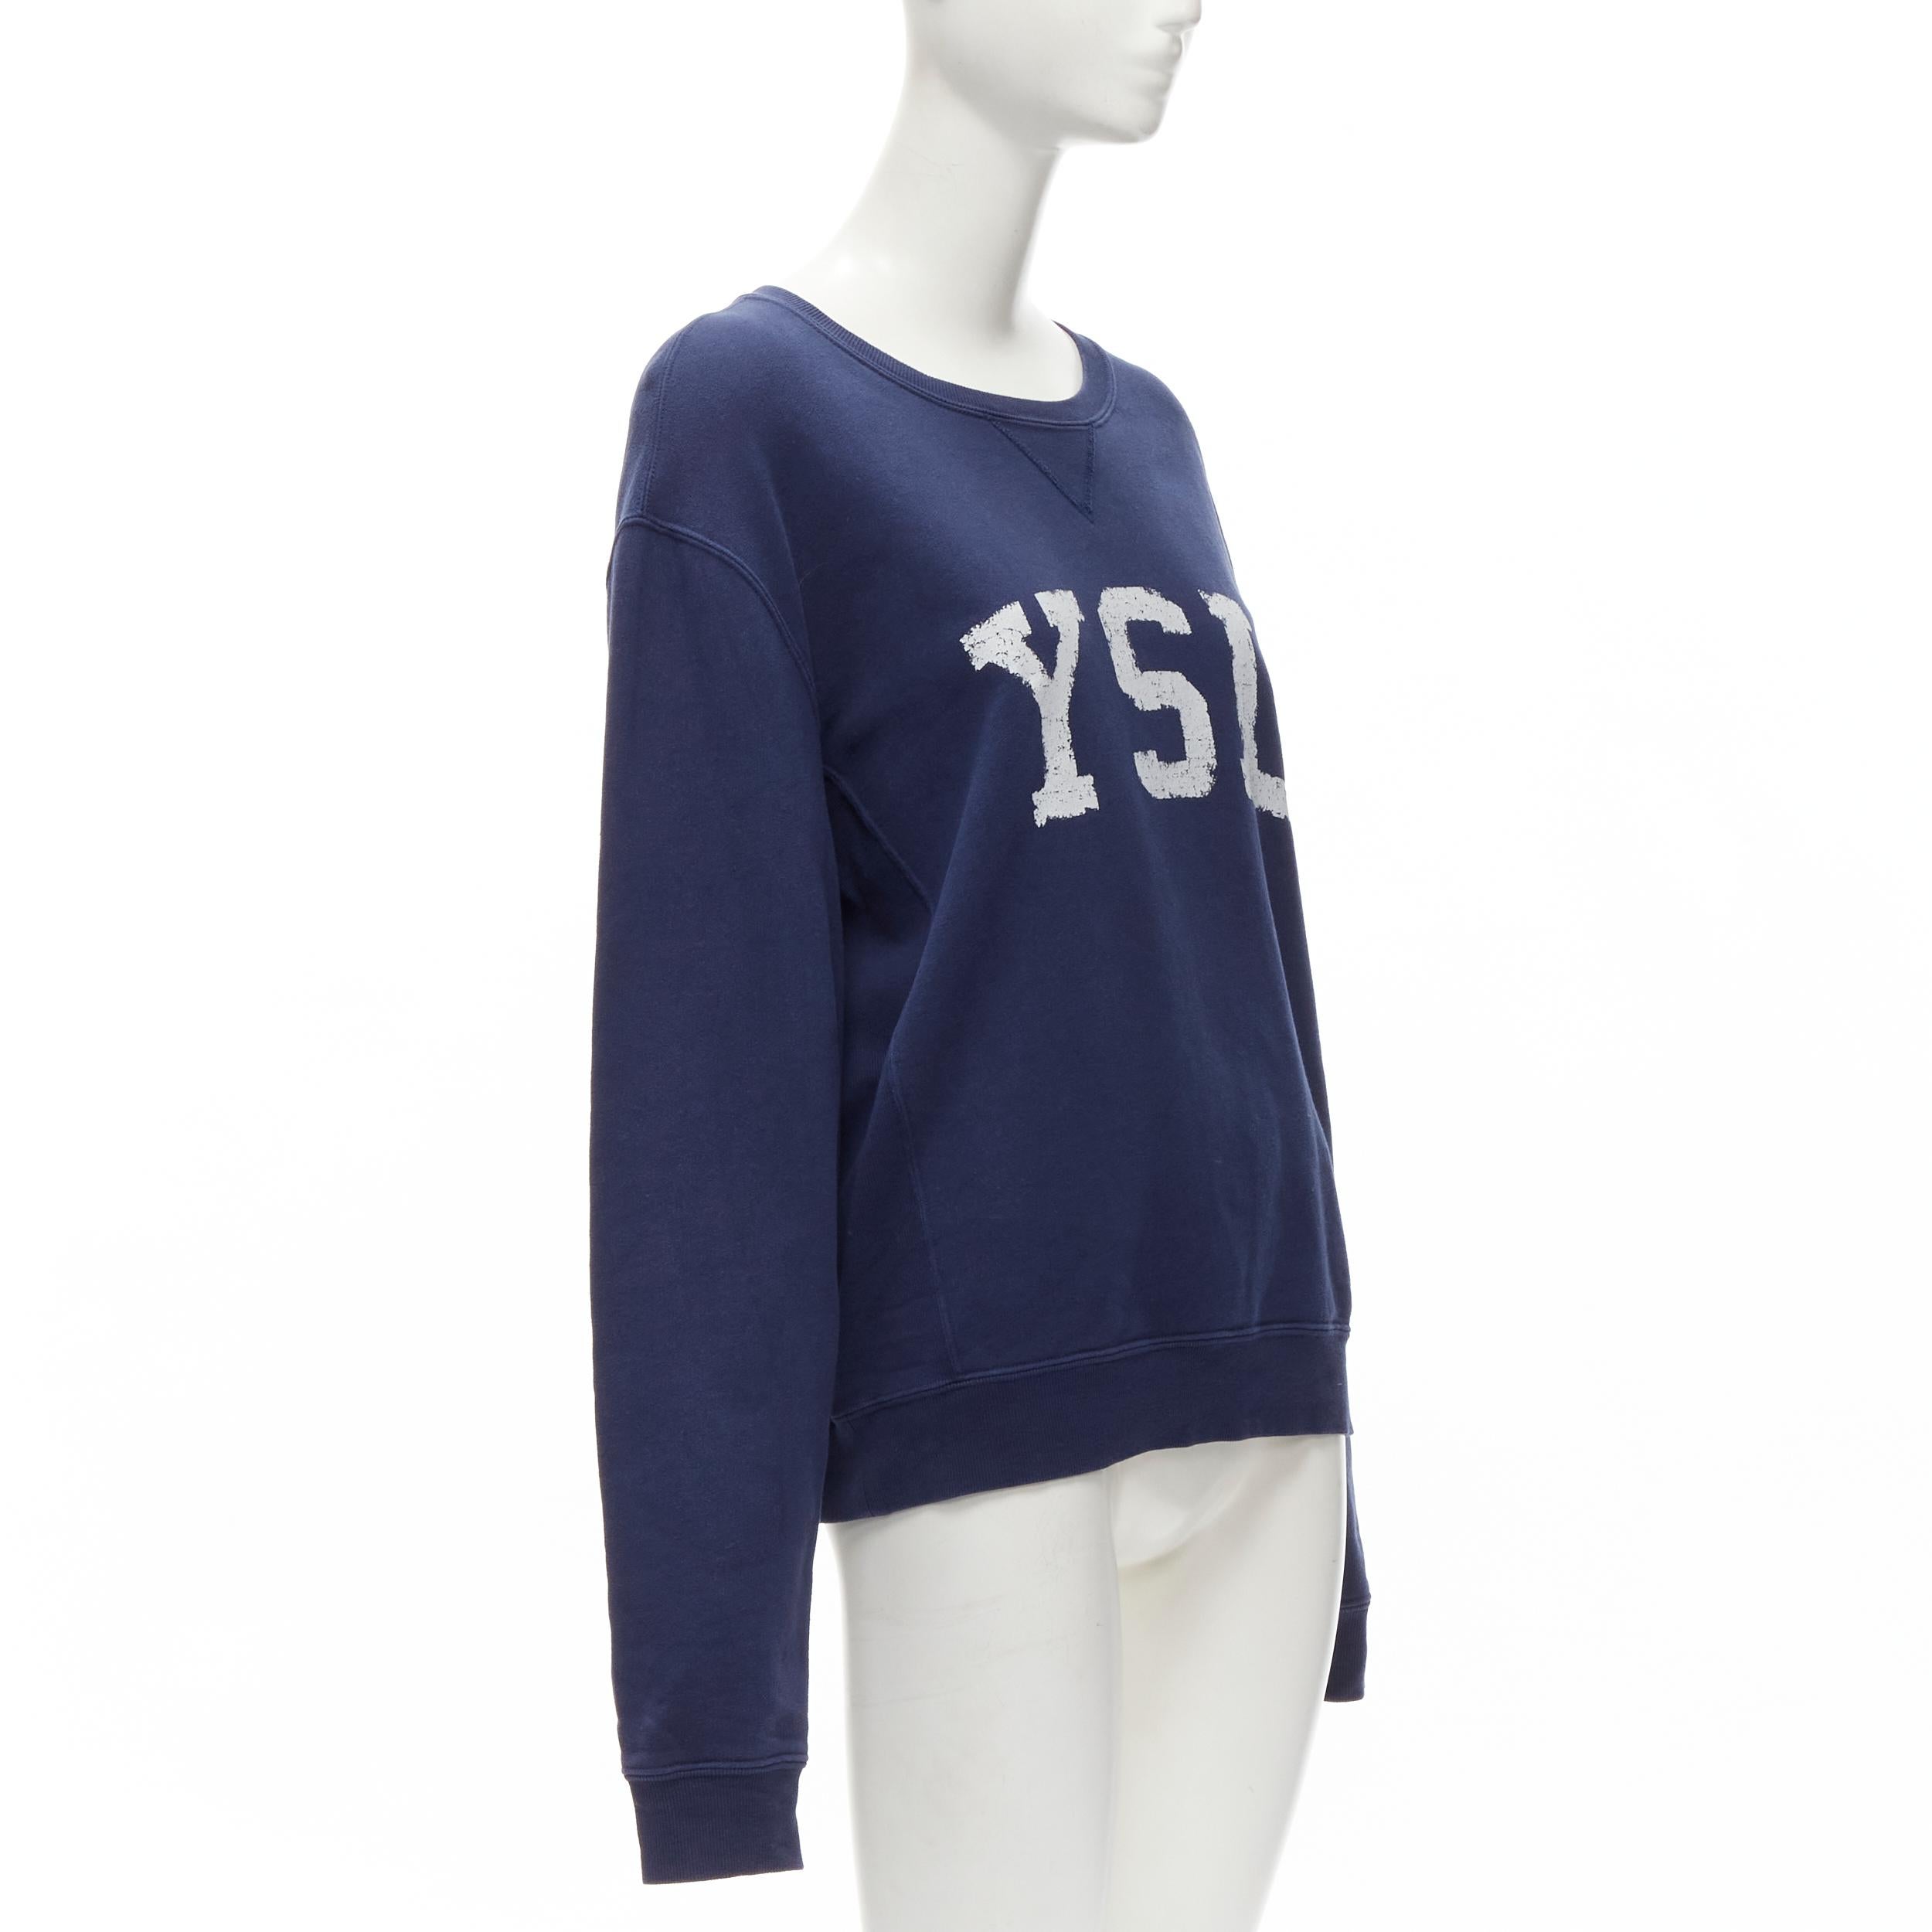 Women's SAINT LAURENT 2021 YSL distressed logo navy blue fleece pullover sweatshirt L